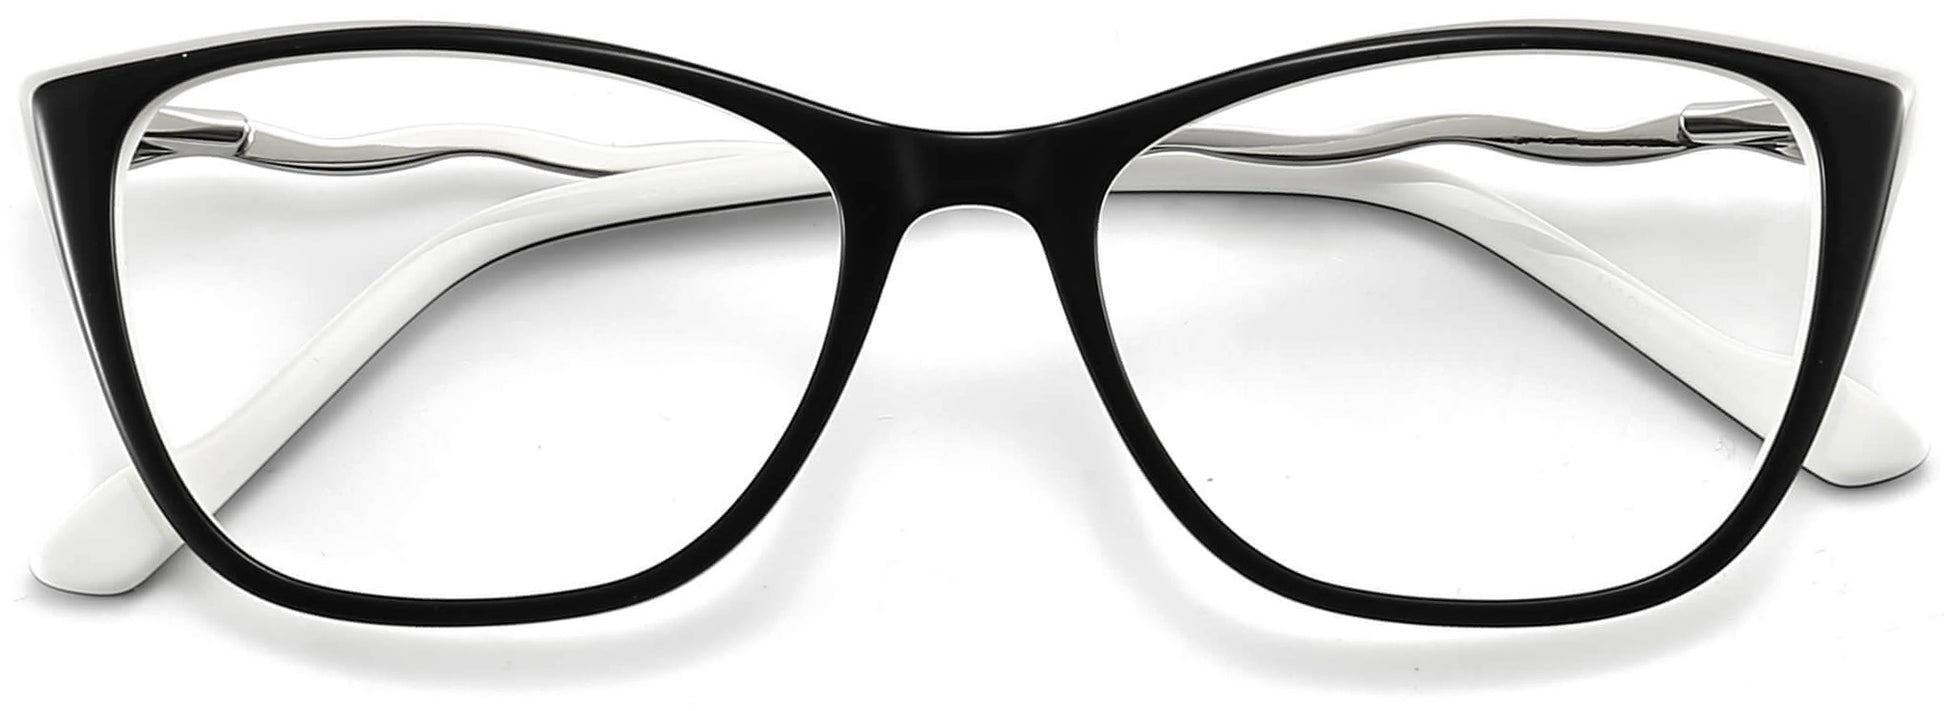 Kira Cateye Black Eyeglasses from ANRRI, closed view